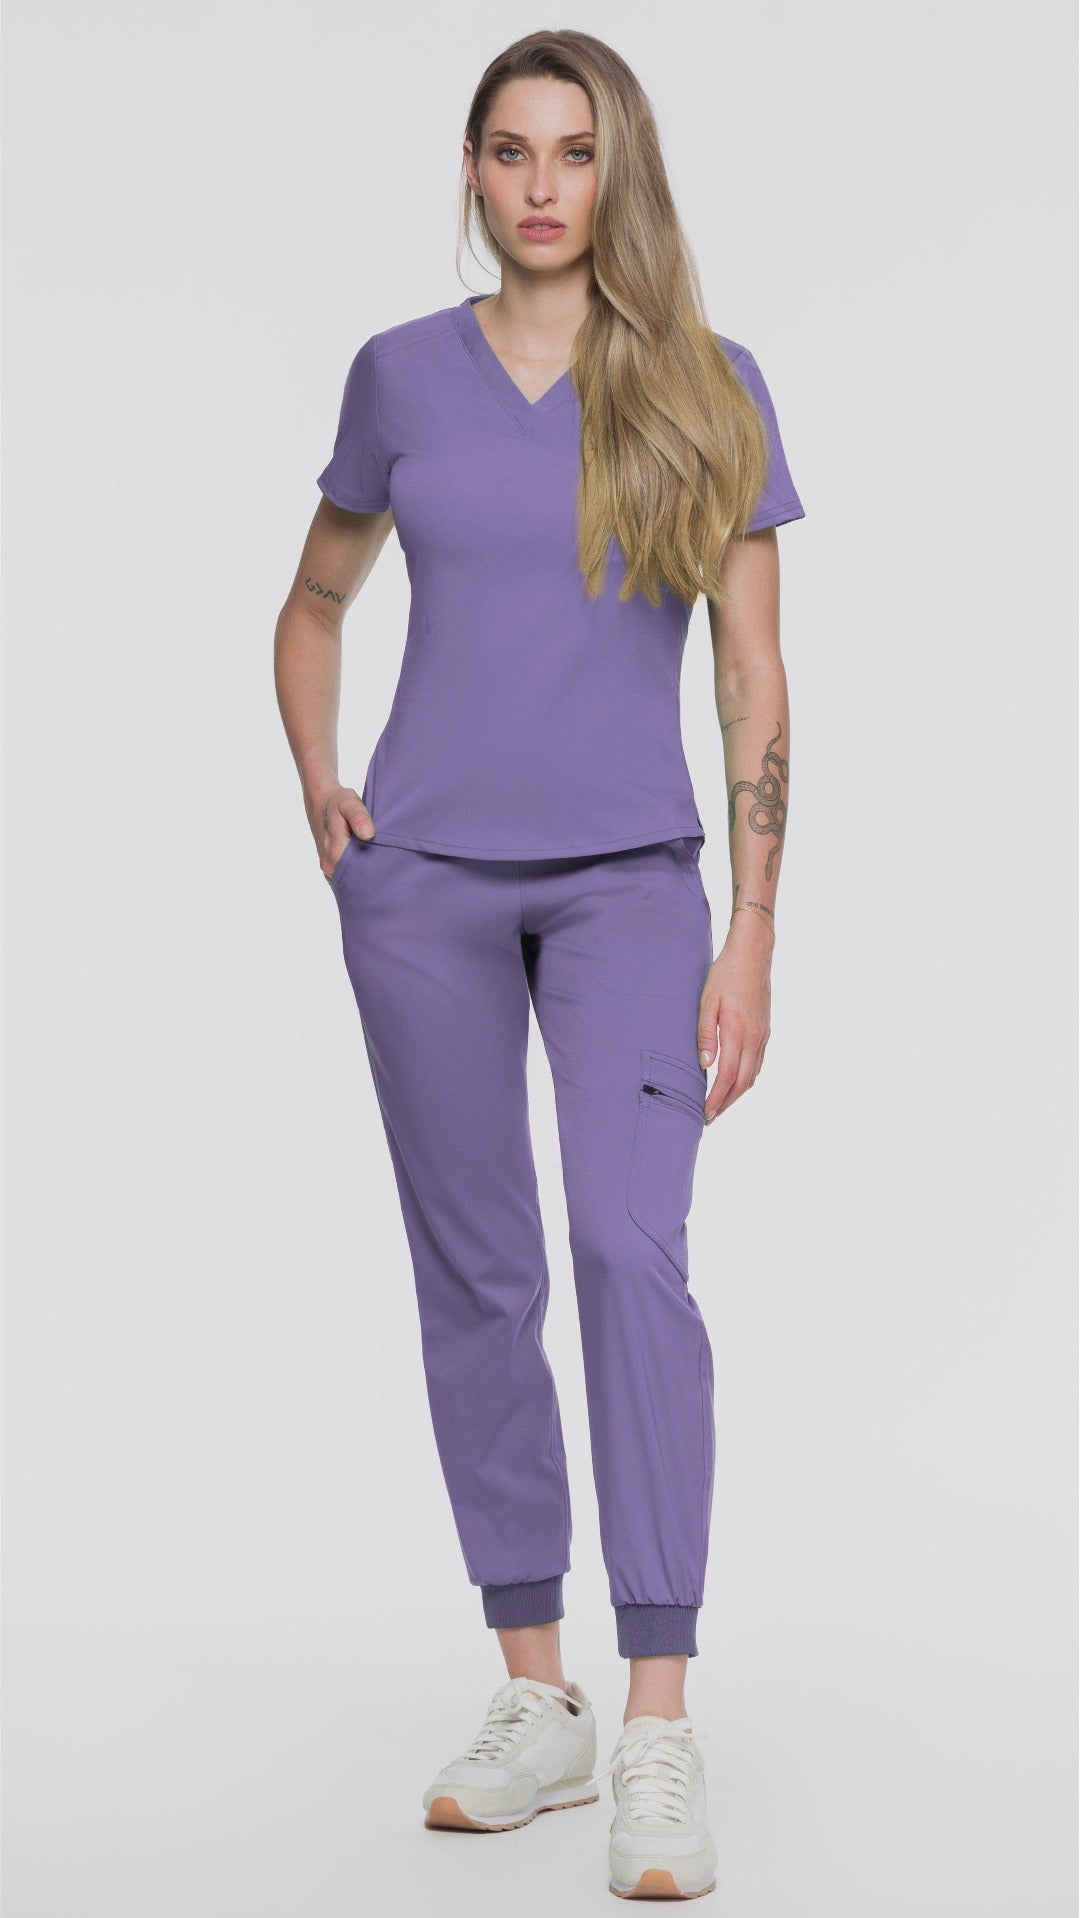 Kanaus uniforme medico hospitalario lila dama